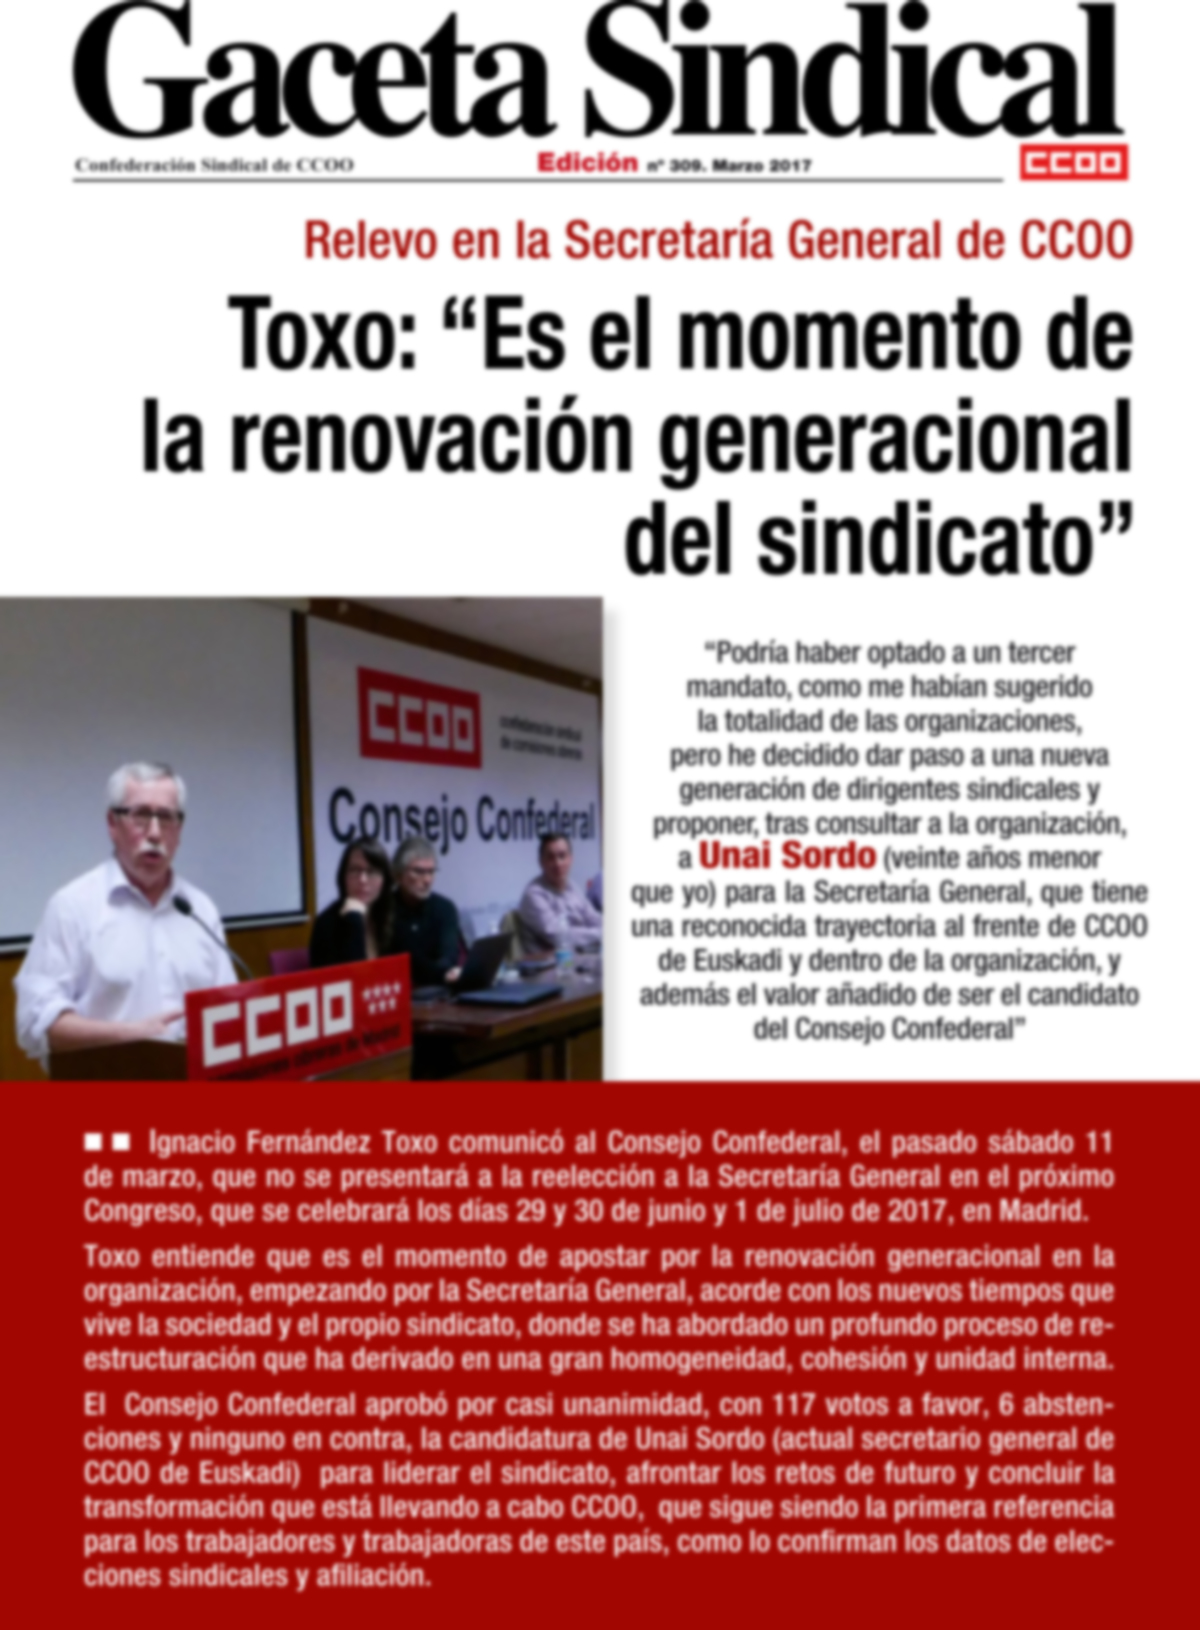 Toxo: Es el momento de la renovacin generacional del sindicato"